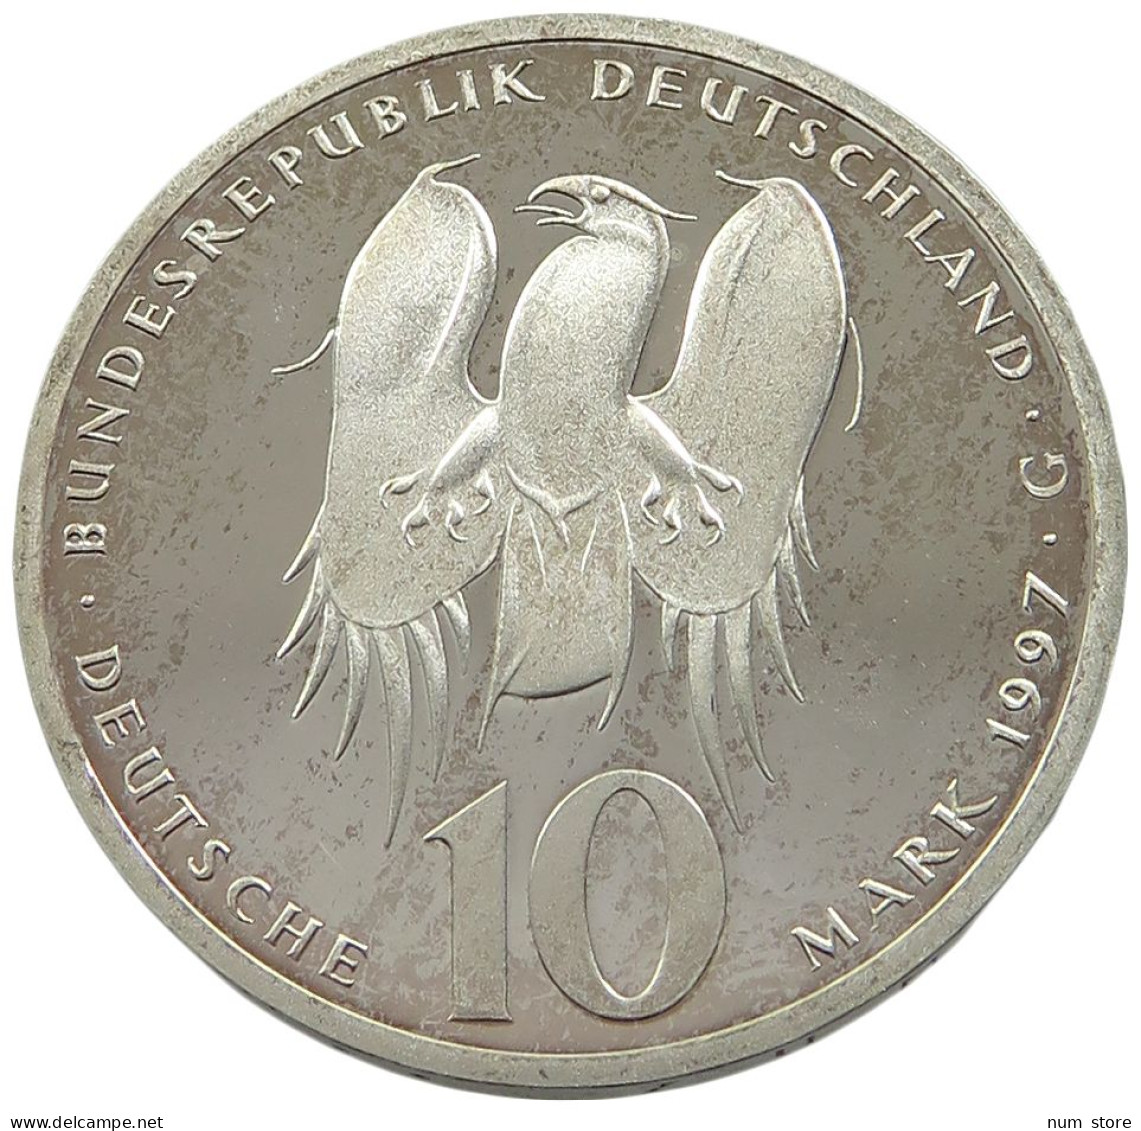 GERMANY BRD 10 MARK 1997 G PROOF #sm14 0967 - 10 Marchi